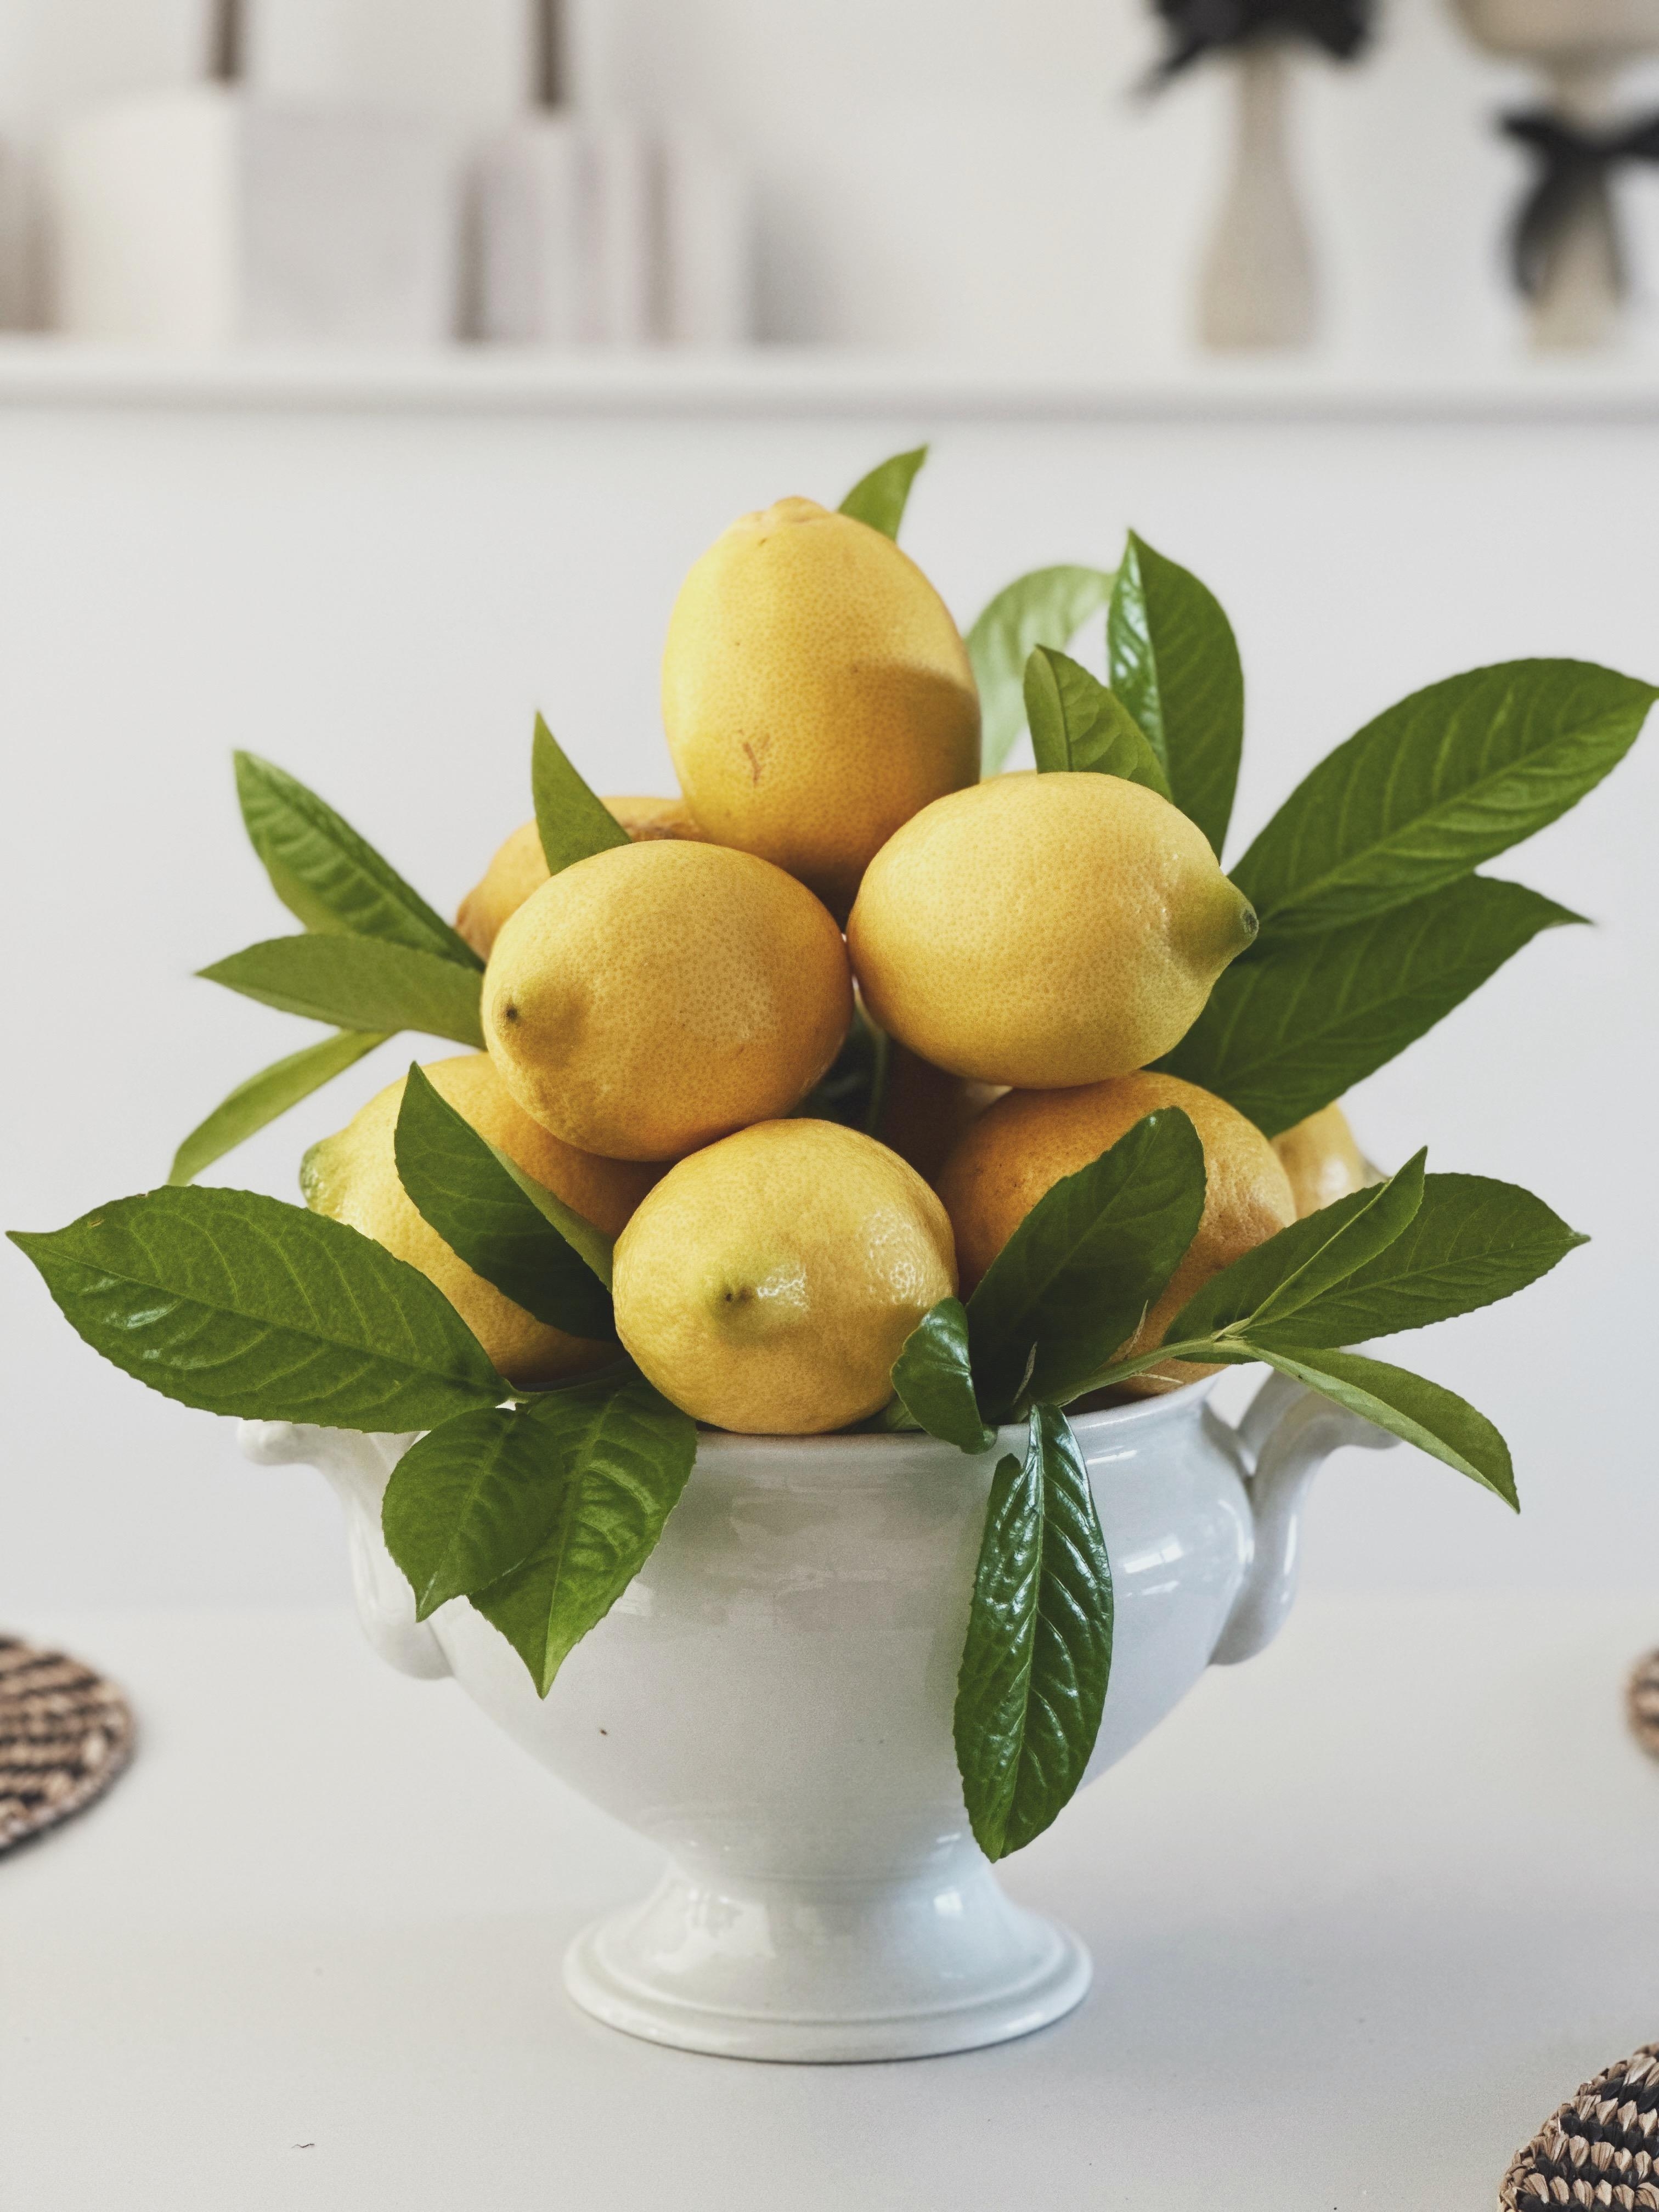 Zitronen olé 🍋🍋🍋 DIY Zitronen Centerpiece für In- und Outdoor #sommerdeko #zitronendeko #diy #naturdeko #diyidee #zitronen #inspiration #tischdeko